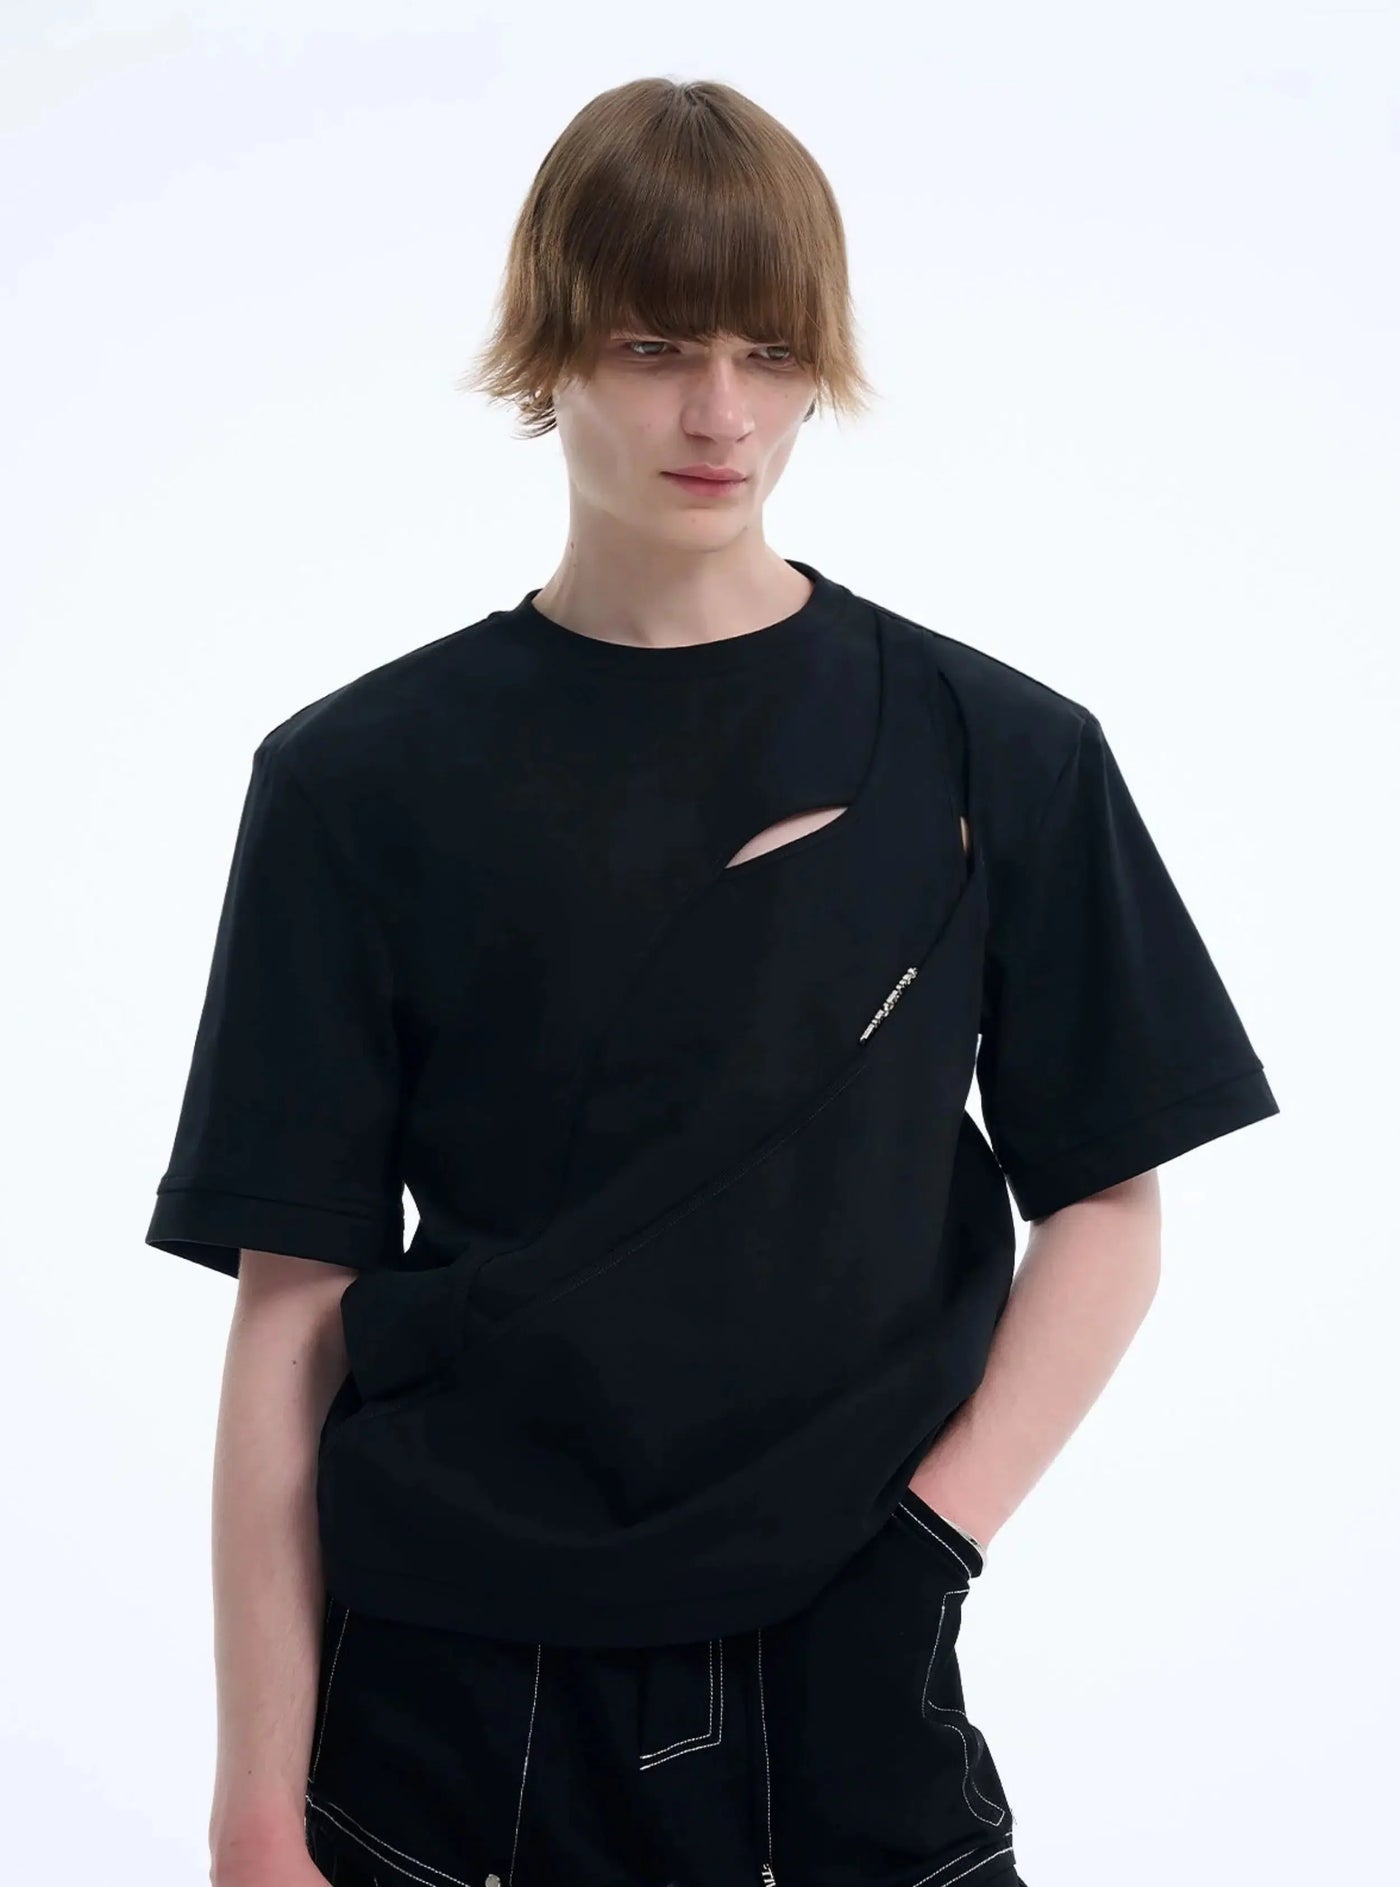 Abstract Line Cut T-Shirt Korean Street Fashion T-Shirt By TIWILLTANG Shop Online at OH Vault